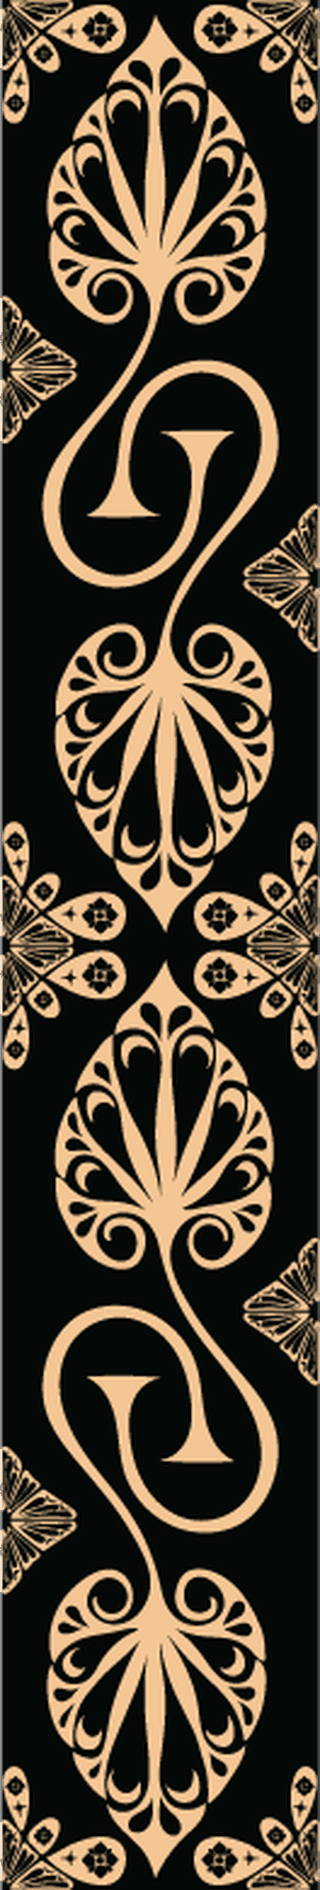 decorativepattern-templates-collection-elegant-retro-repeating-symmetric-814895